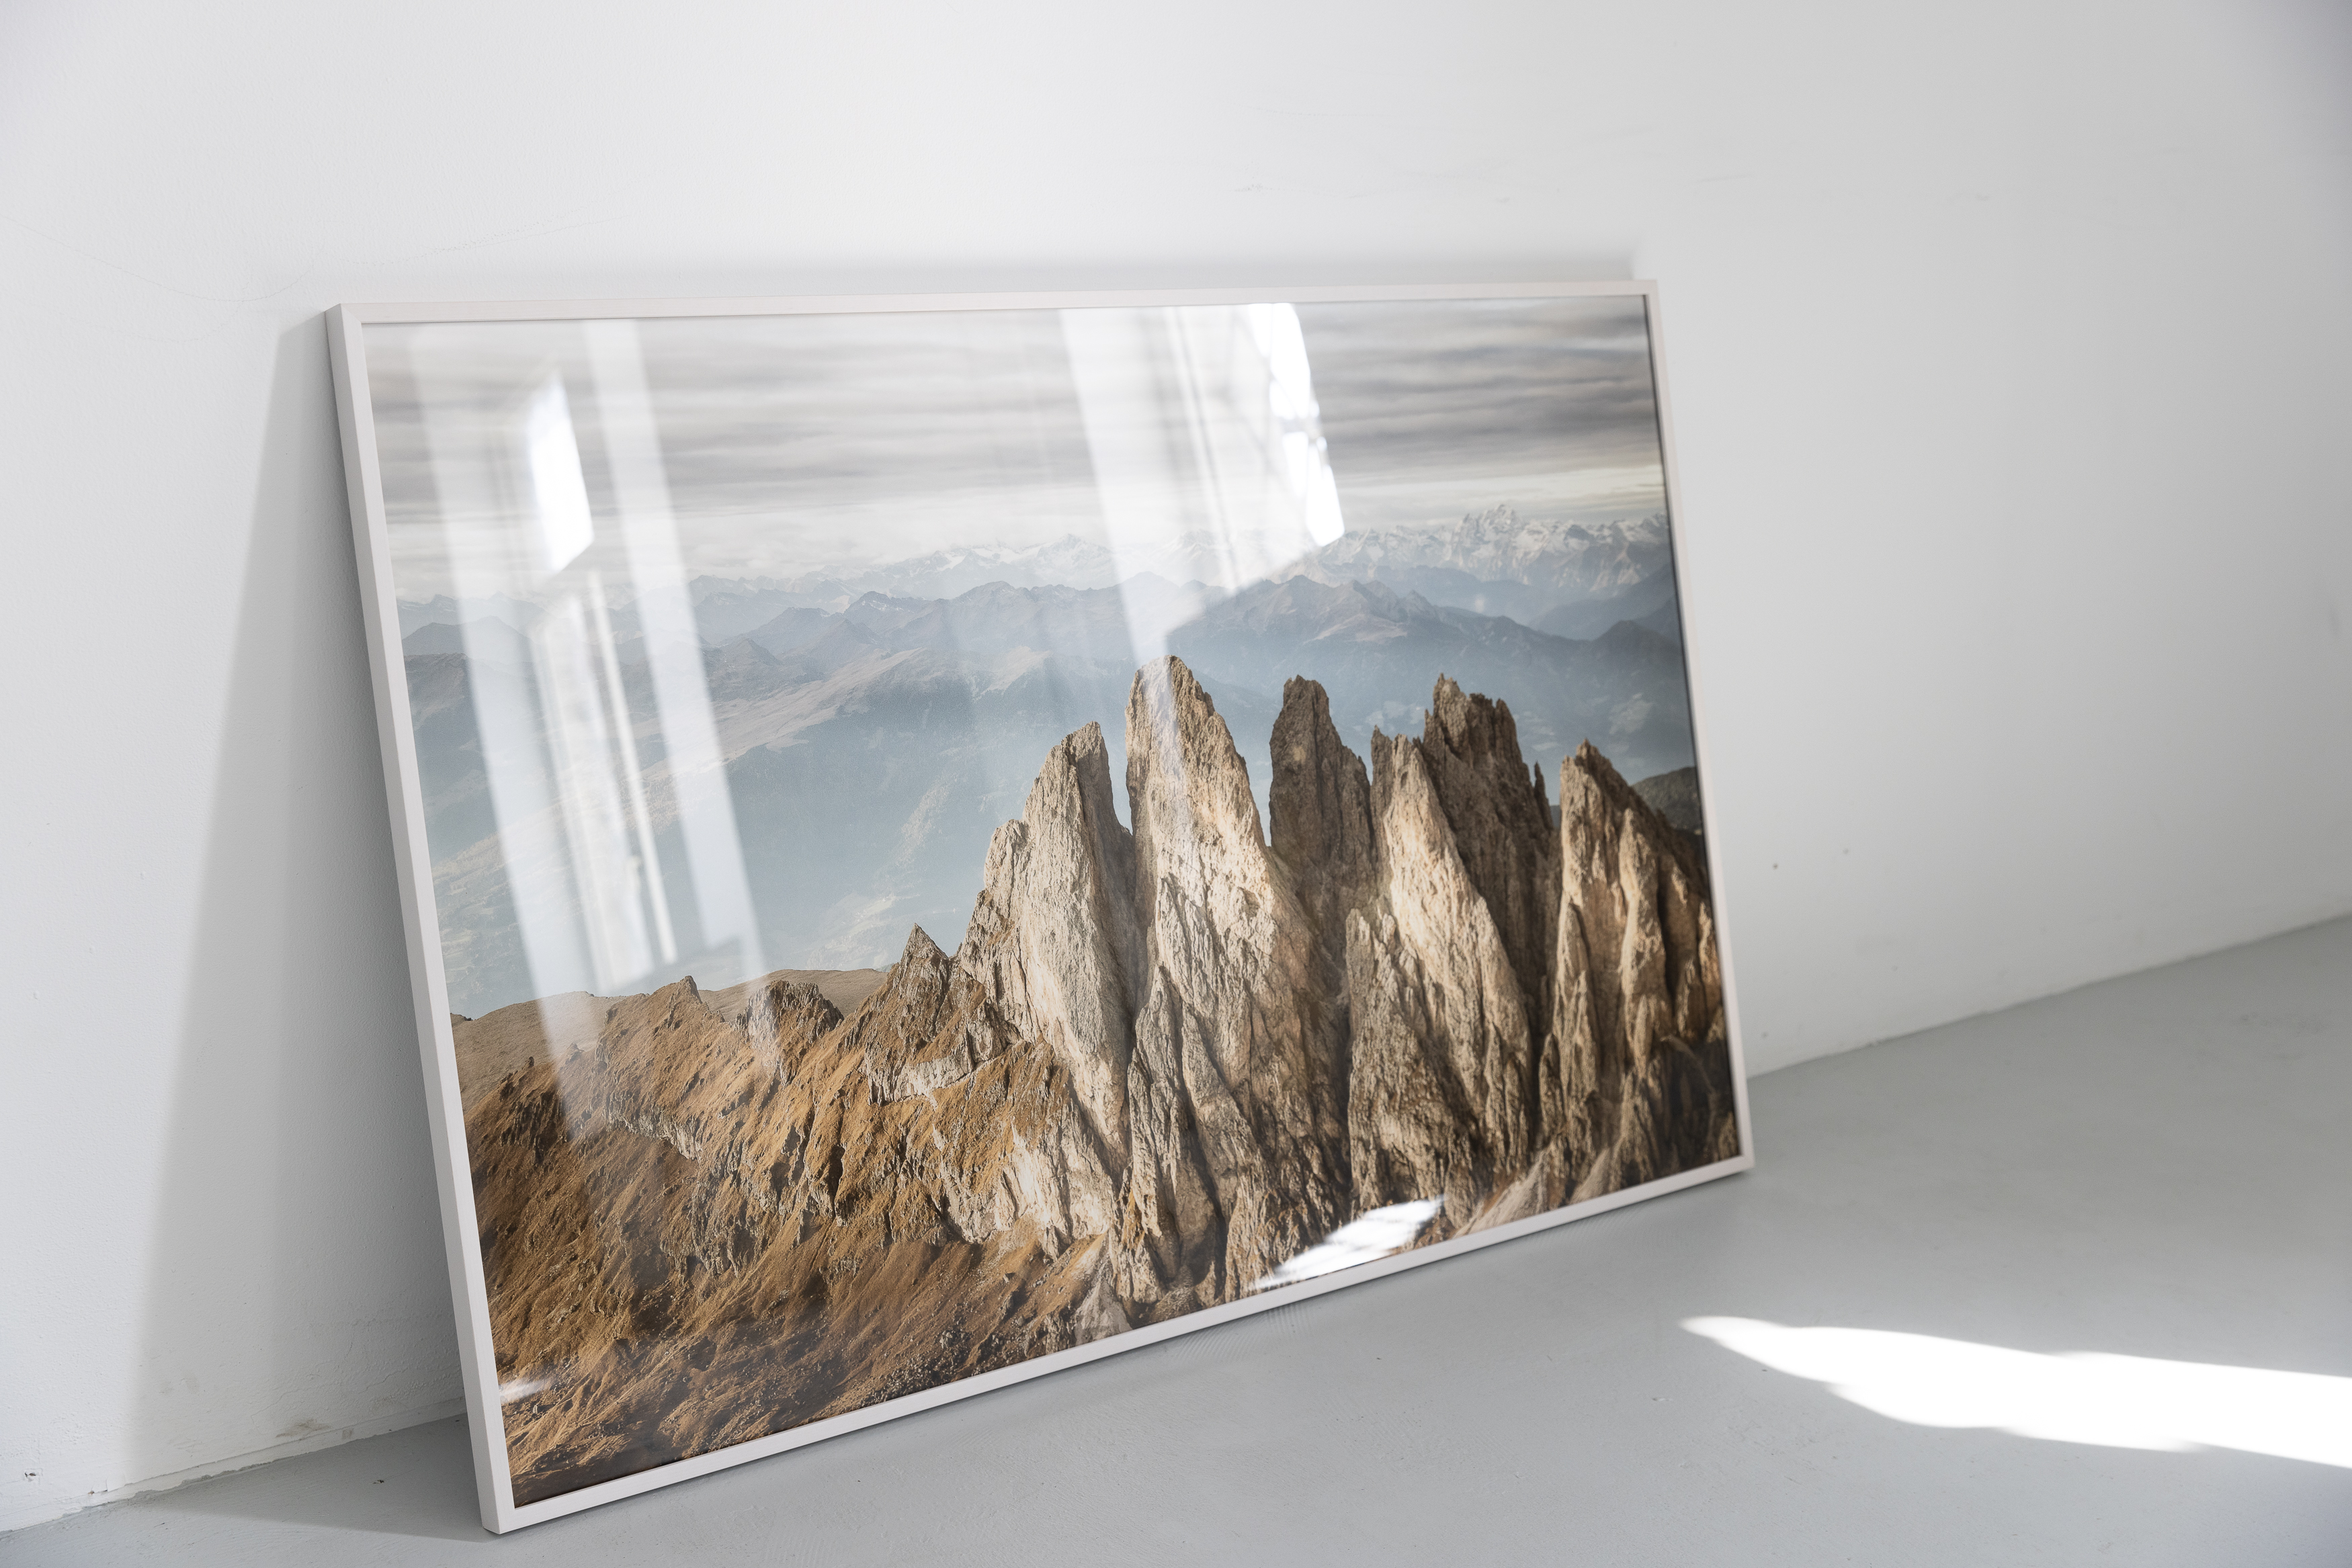 Limited Photographs Artworks - Dolomits, Alps